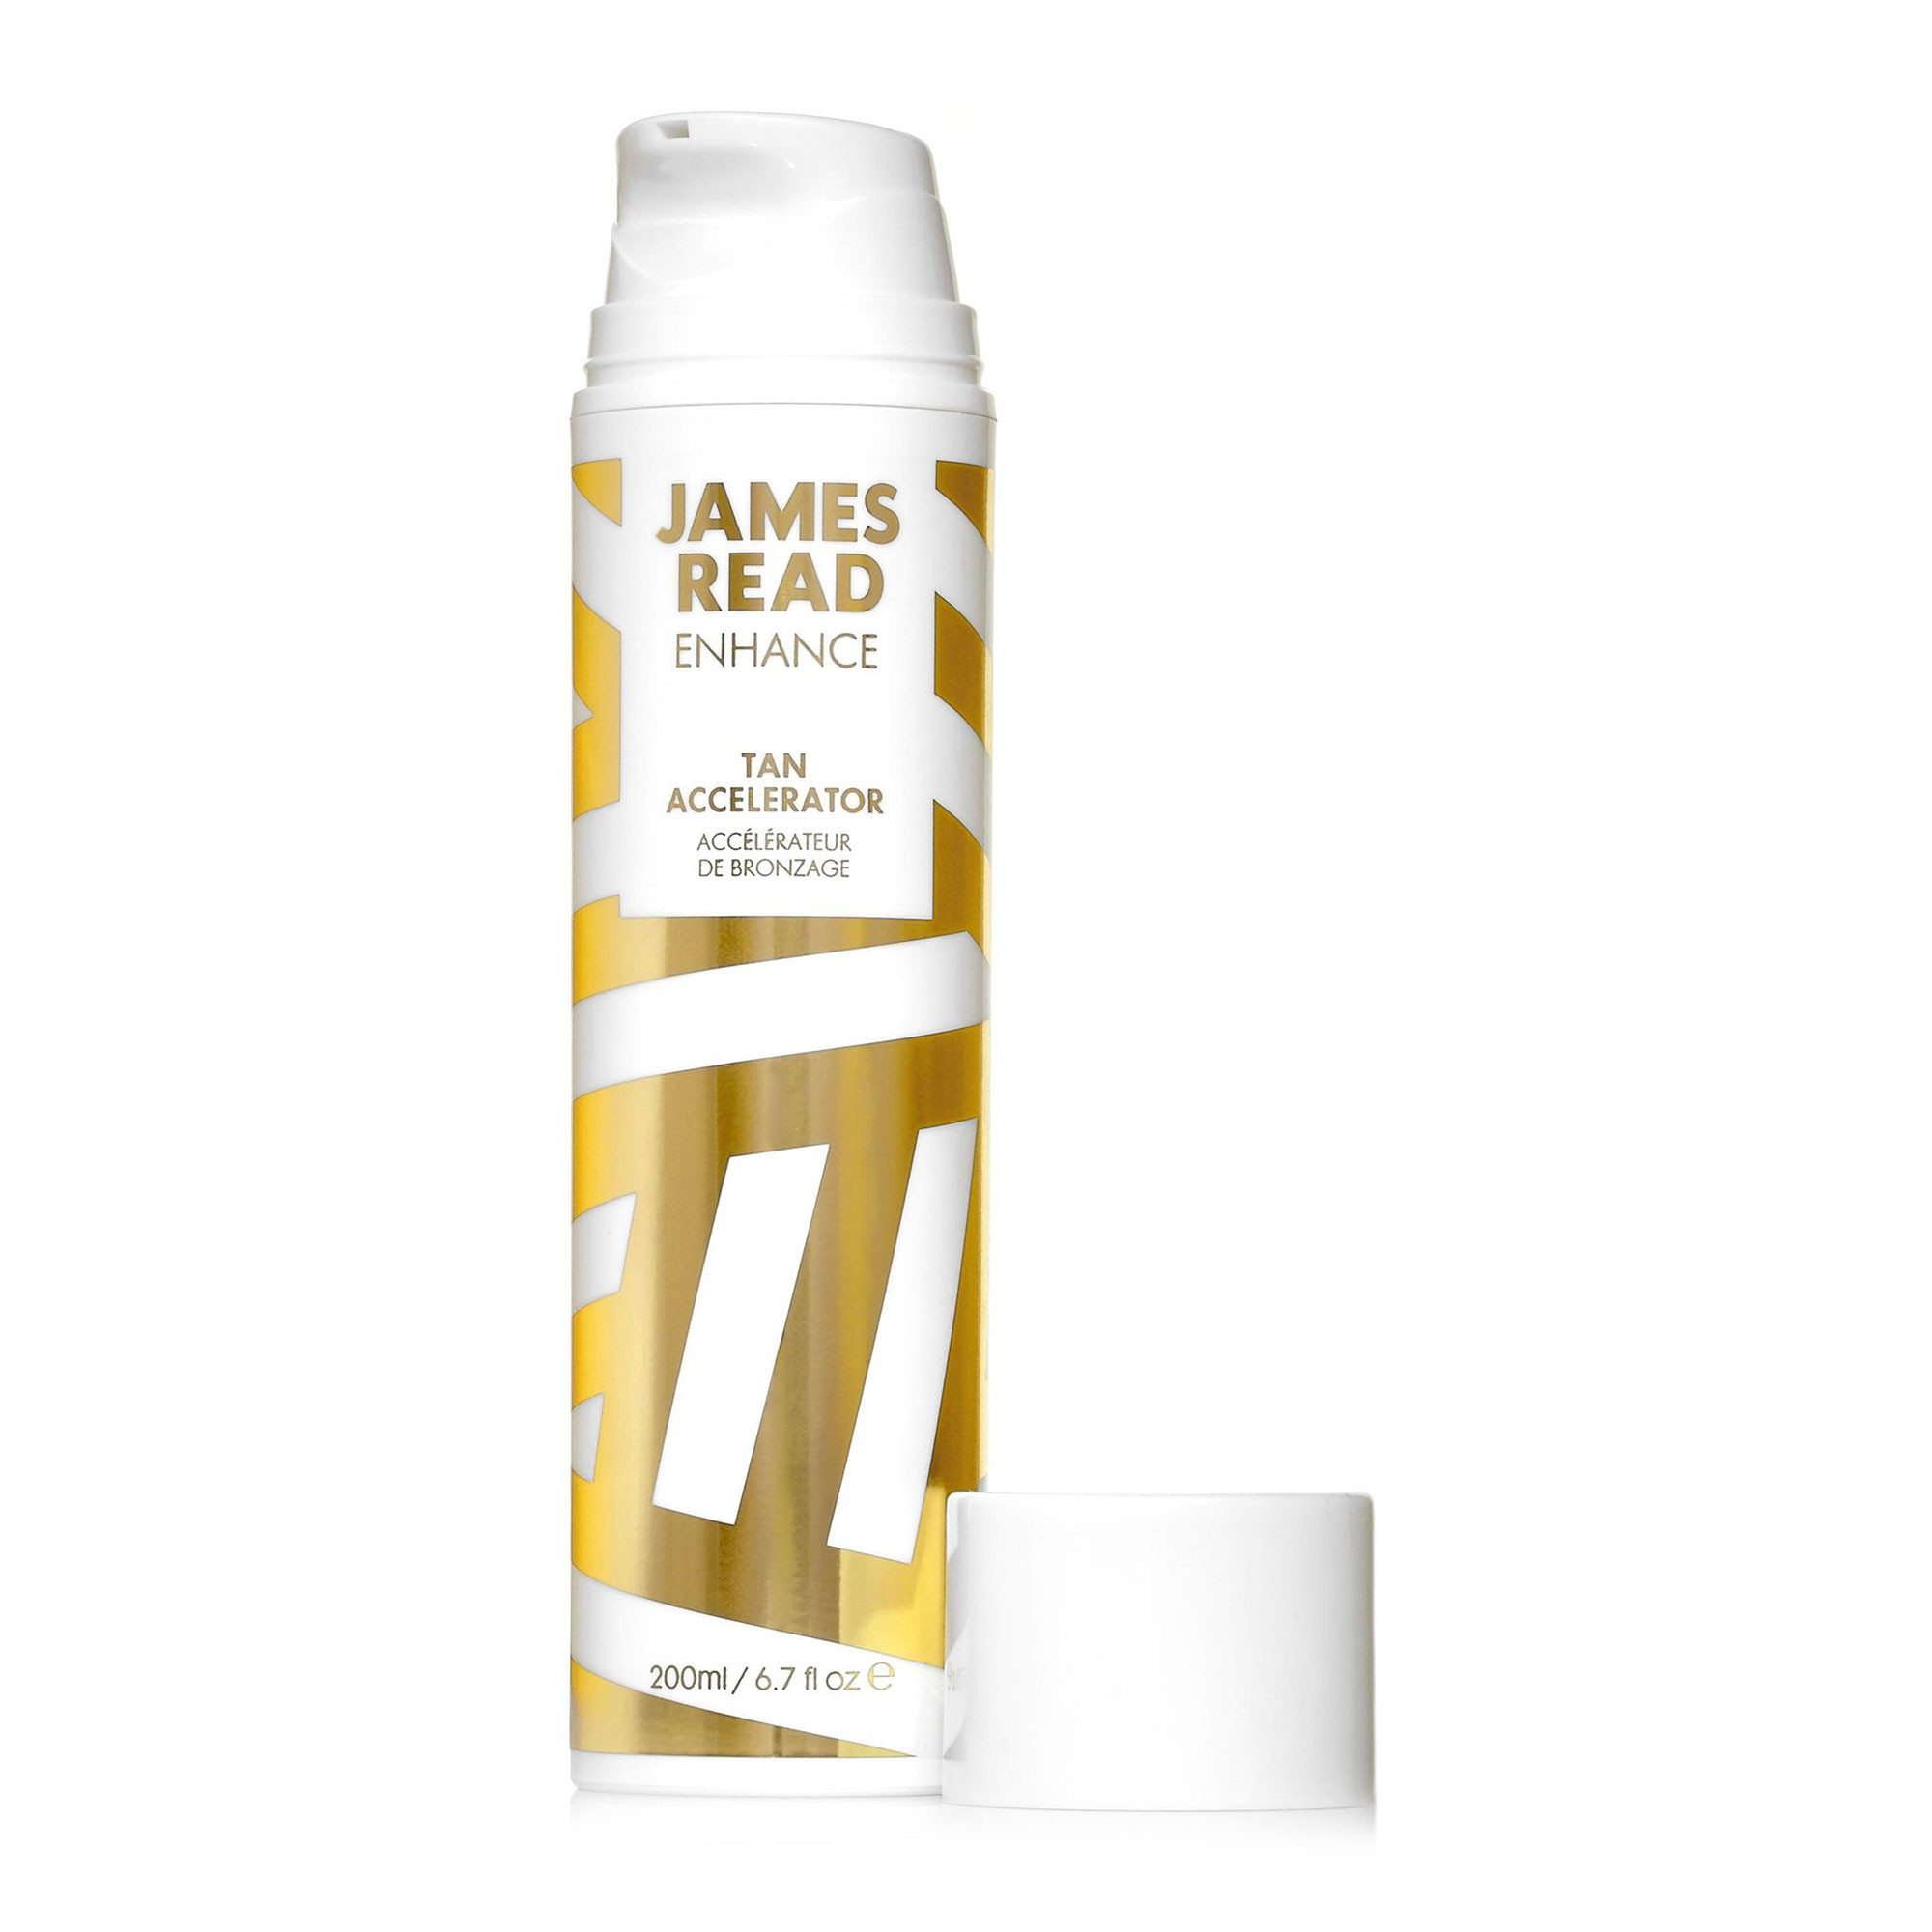 James Read Tan Accelerator Face and Body Підсилювач засмаги для обличчя та тіла